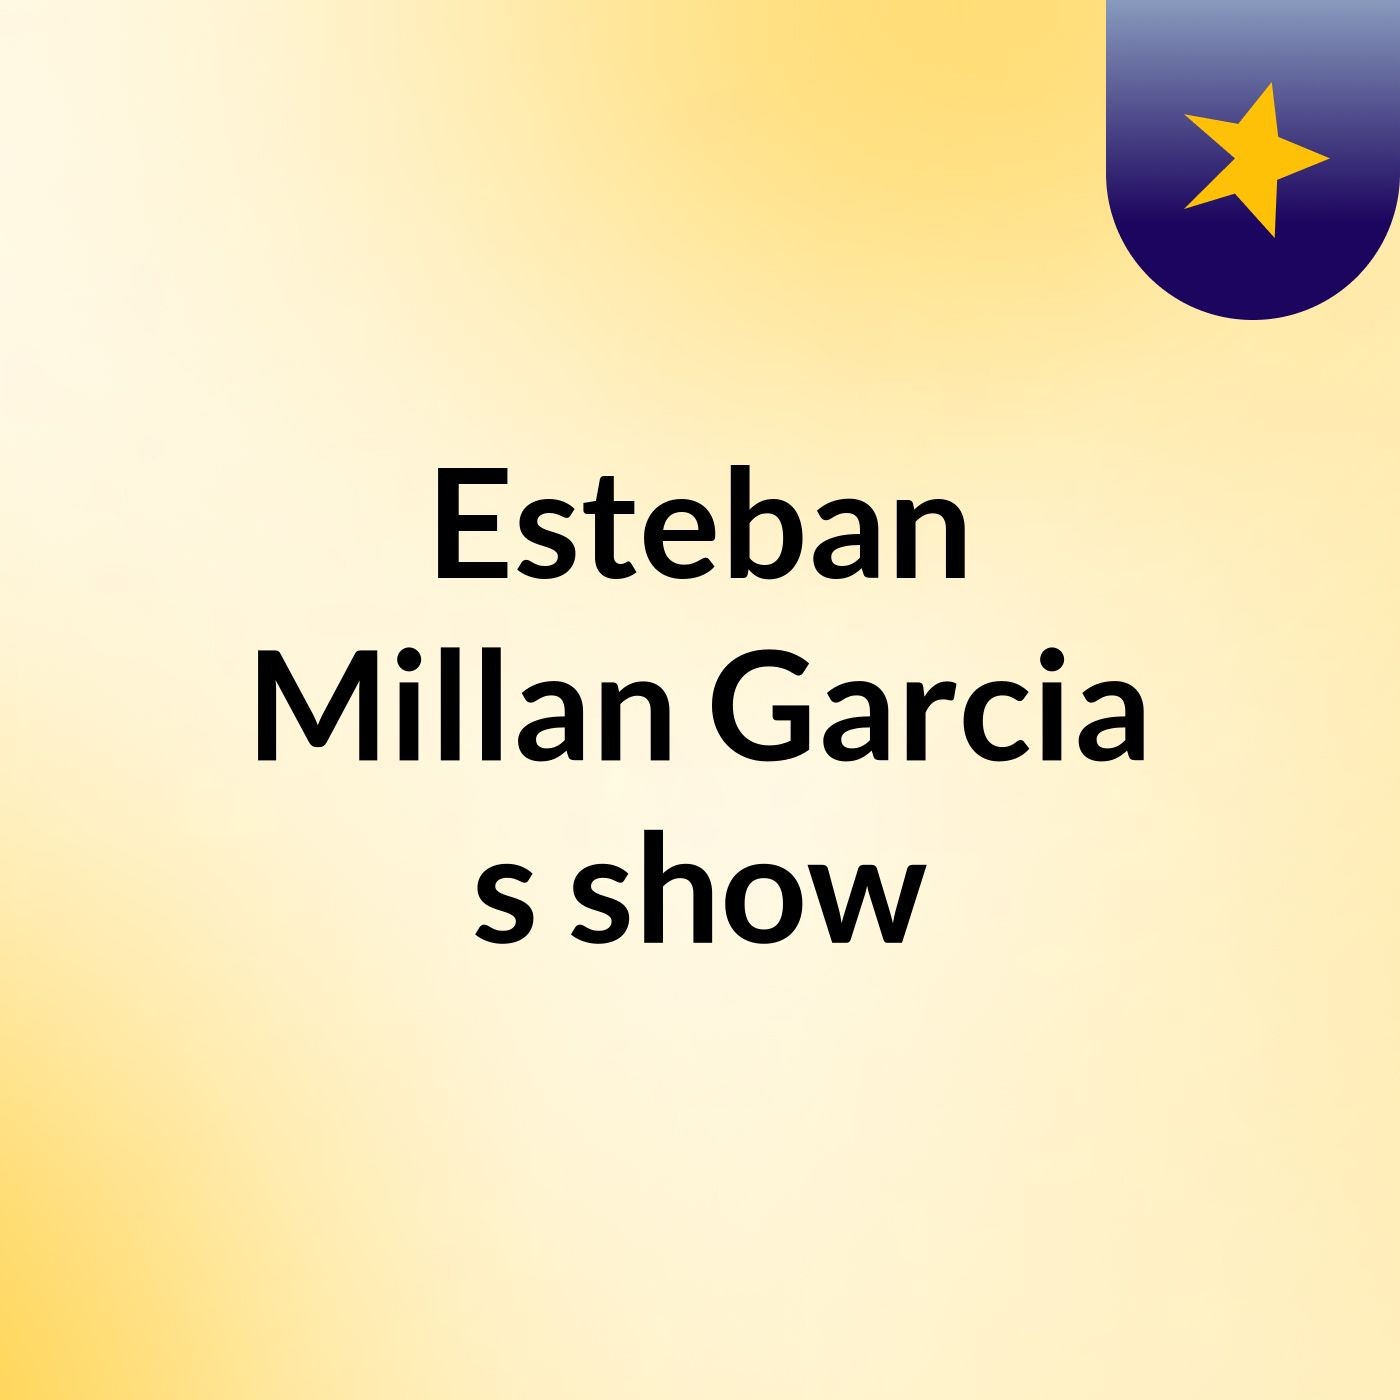 Esteban Millan Garcia's show